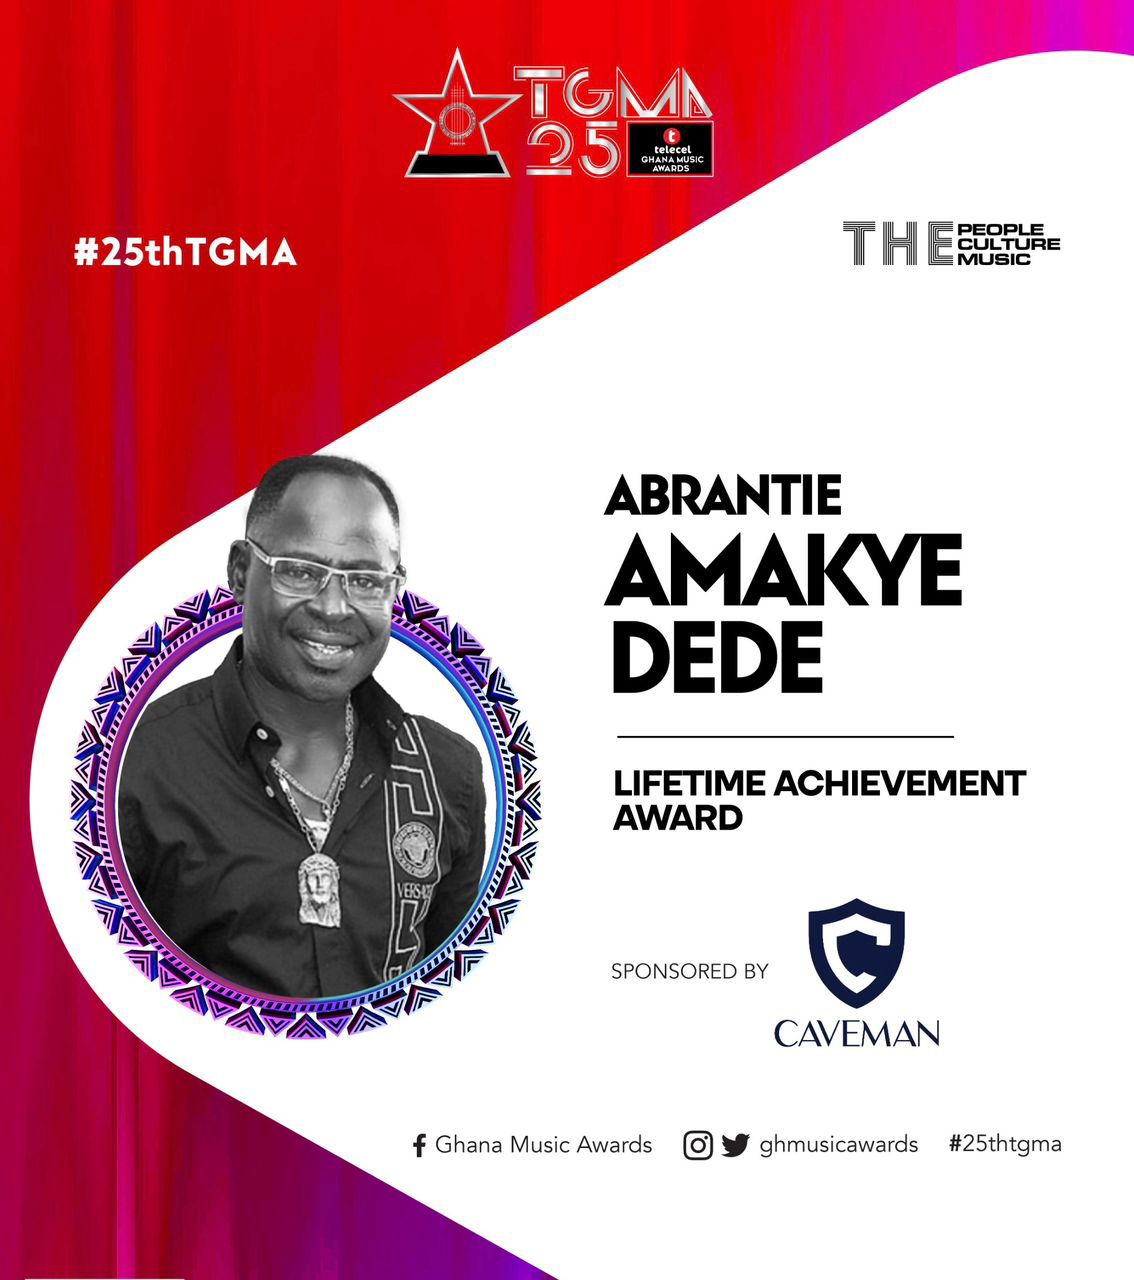 Amakye Dede – Lifetime Achievement Award Introduction